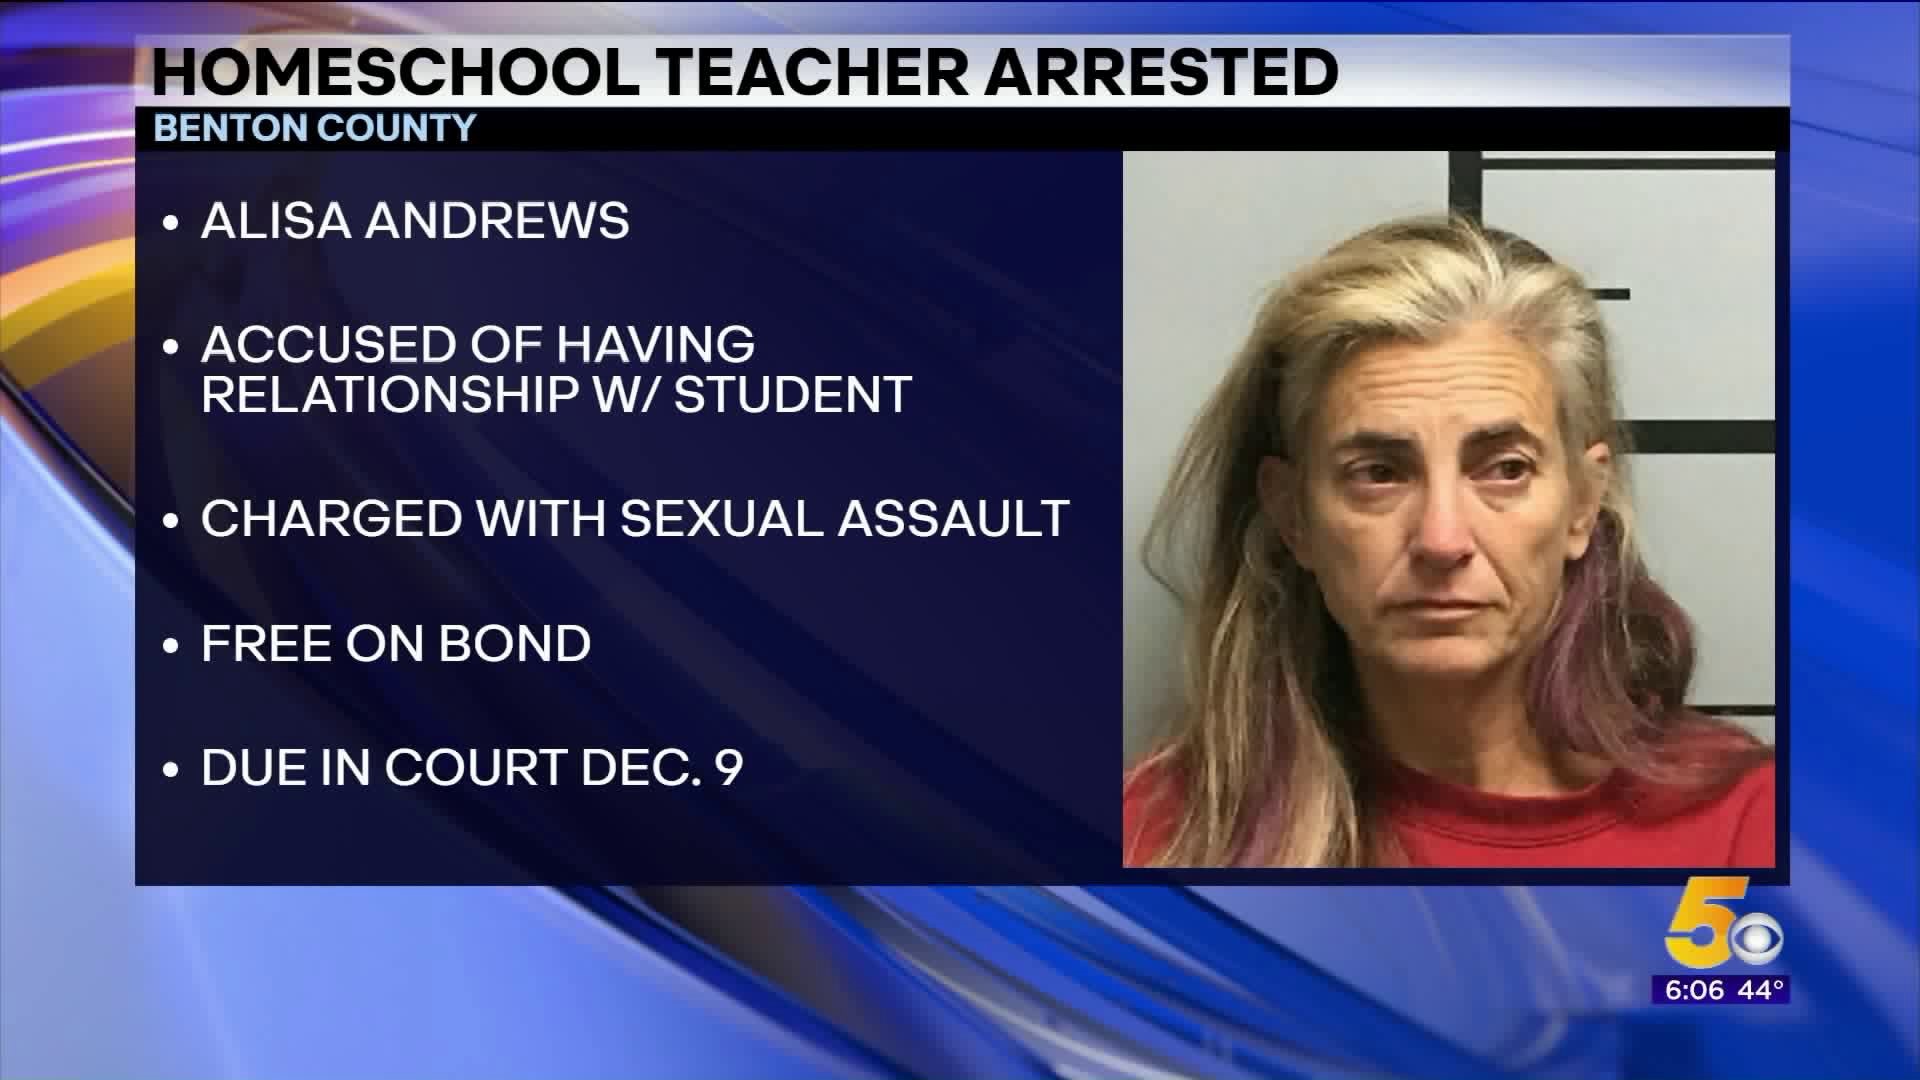 Rogers Home-School Teacher Arrested For Sexual Assault